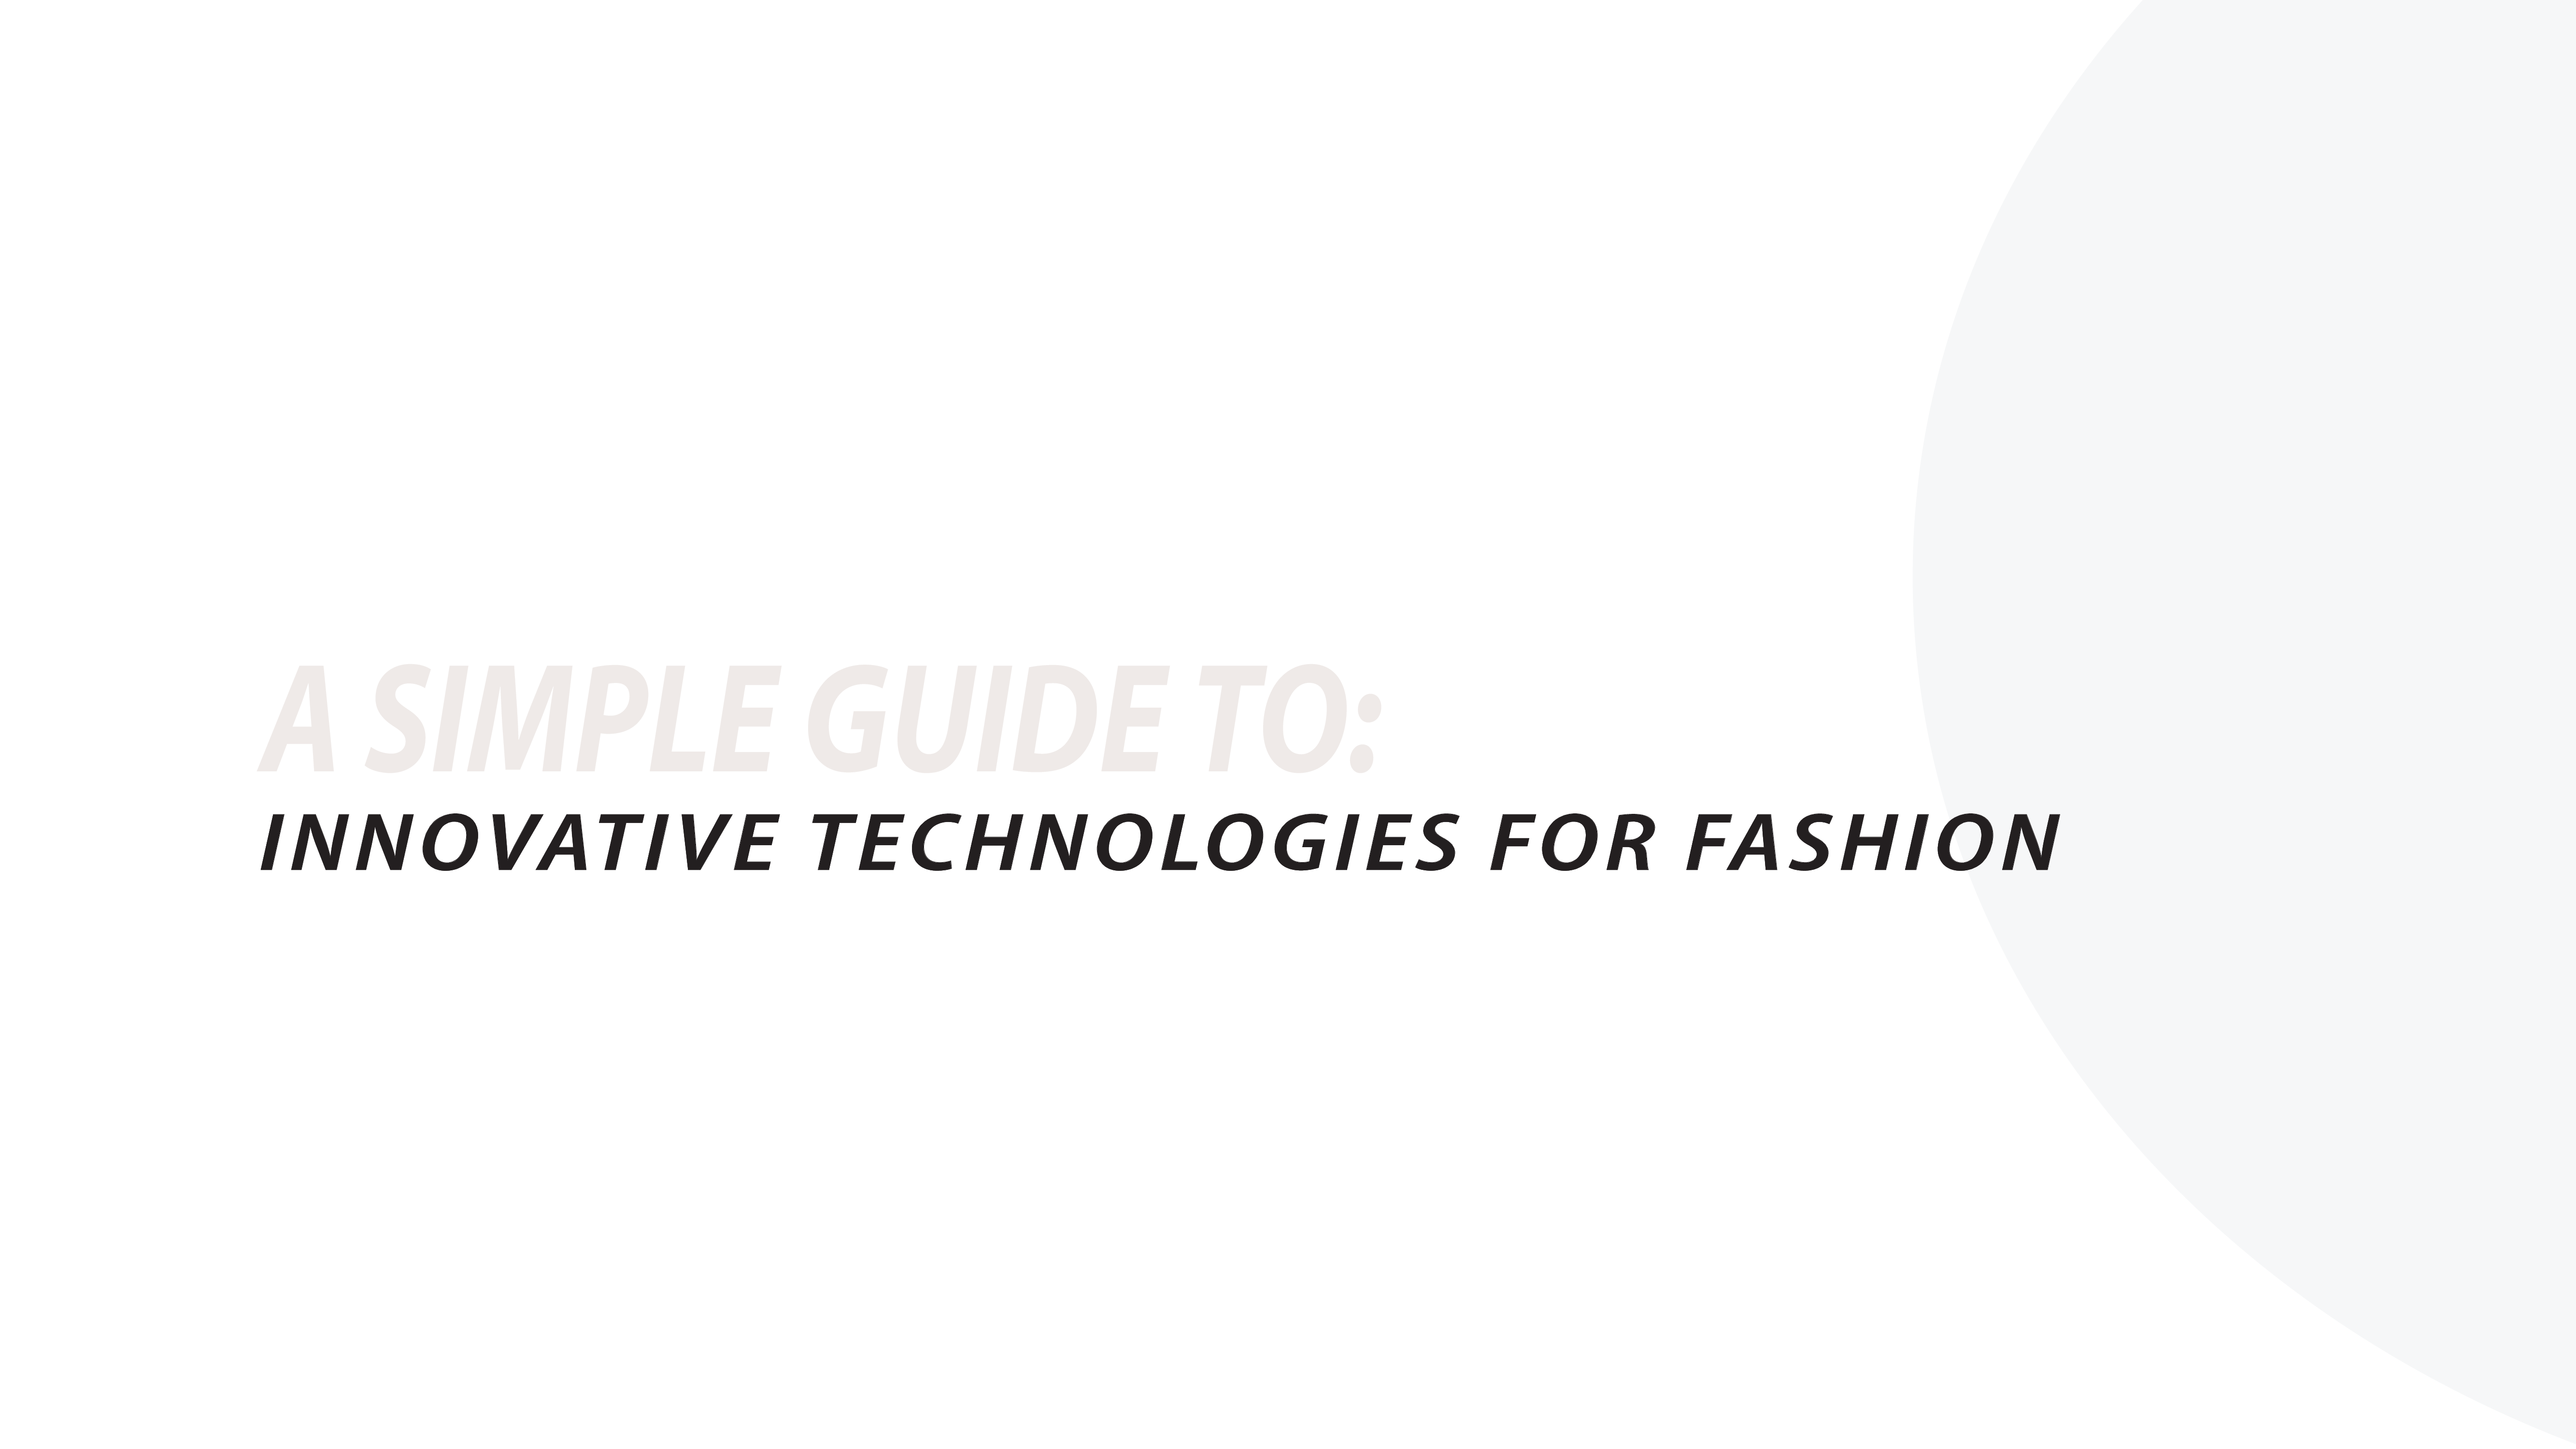 Innovative technologies for fashion